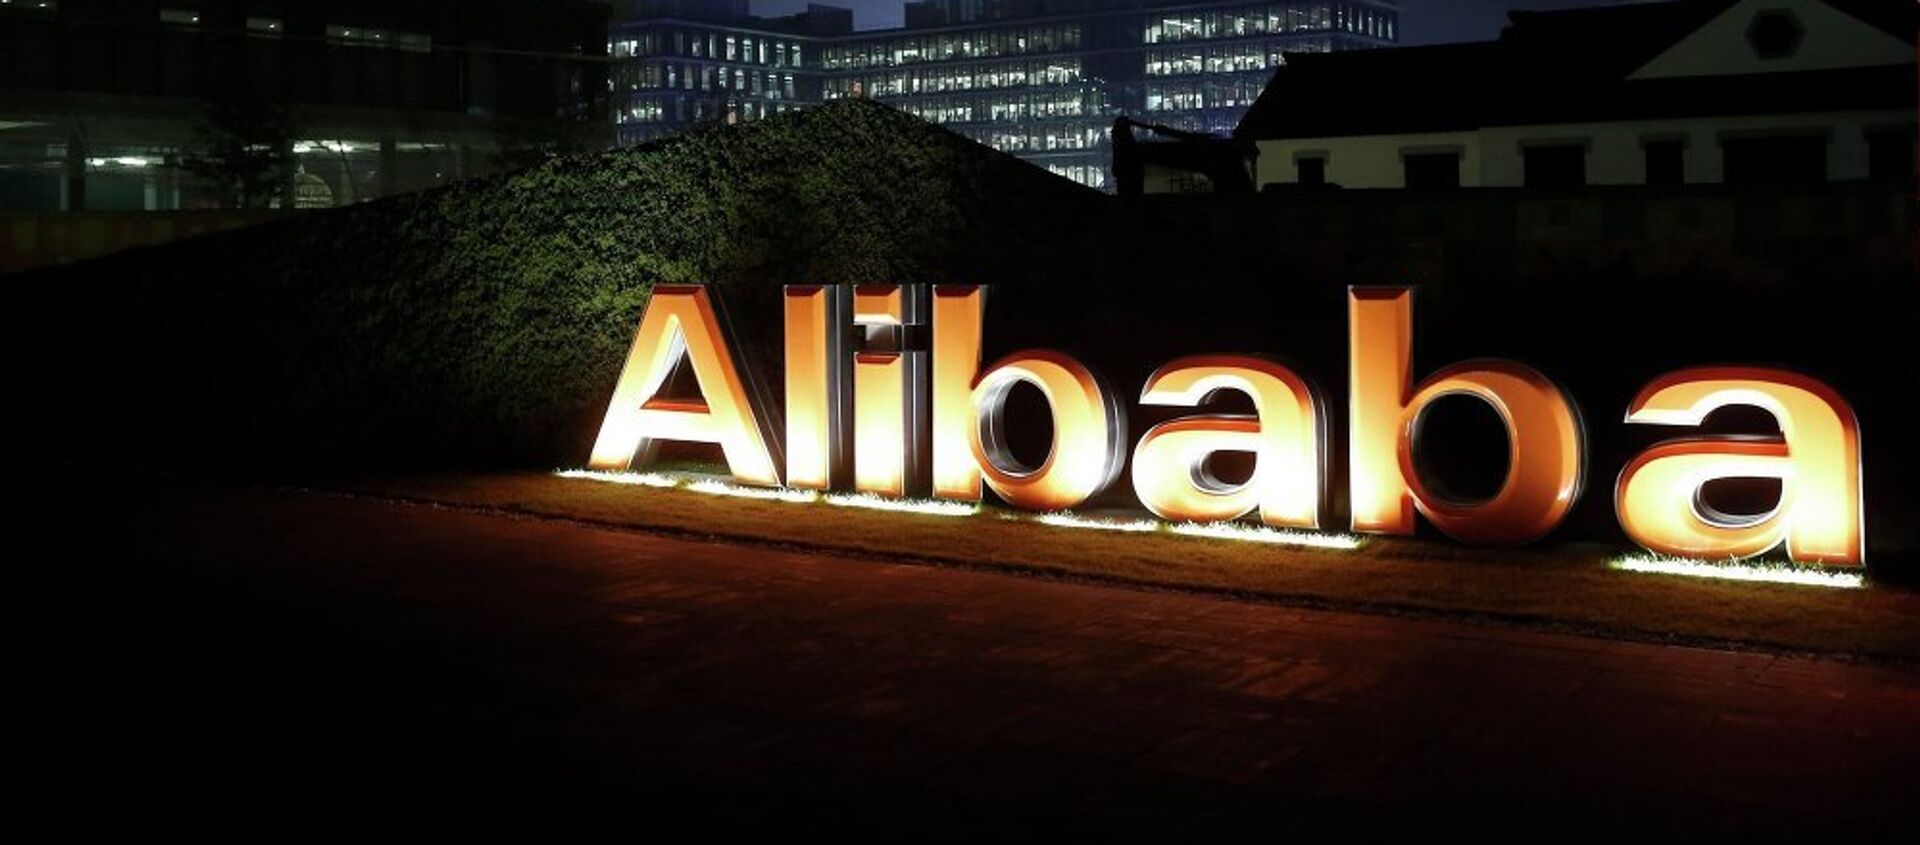 Alibaba Group - 俄羅斯衛星通訊社, 1920, 05.06.2019